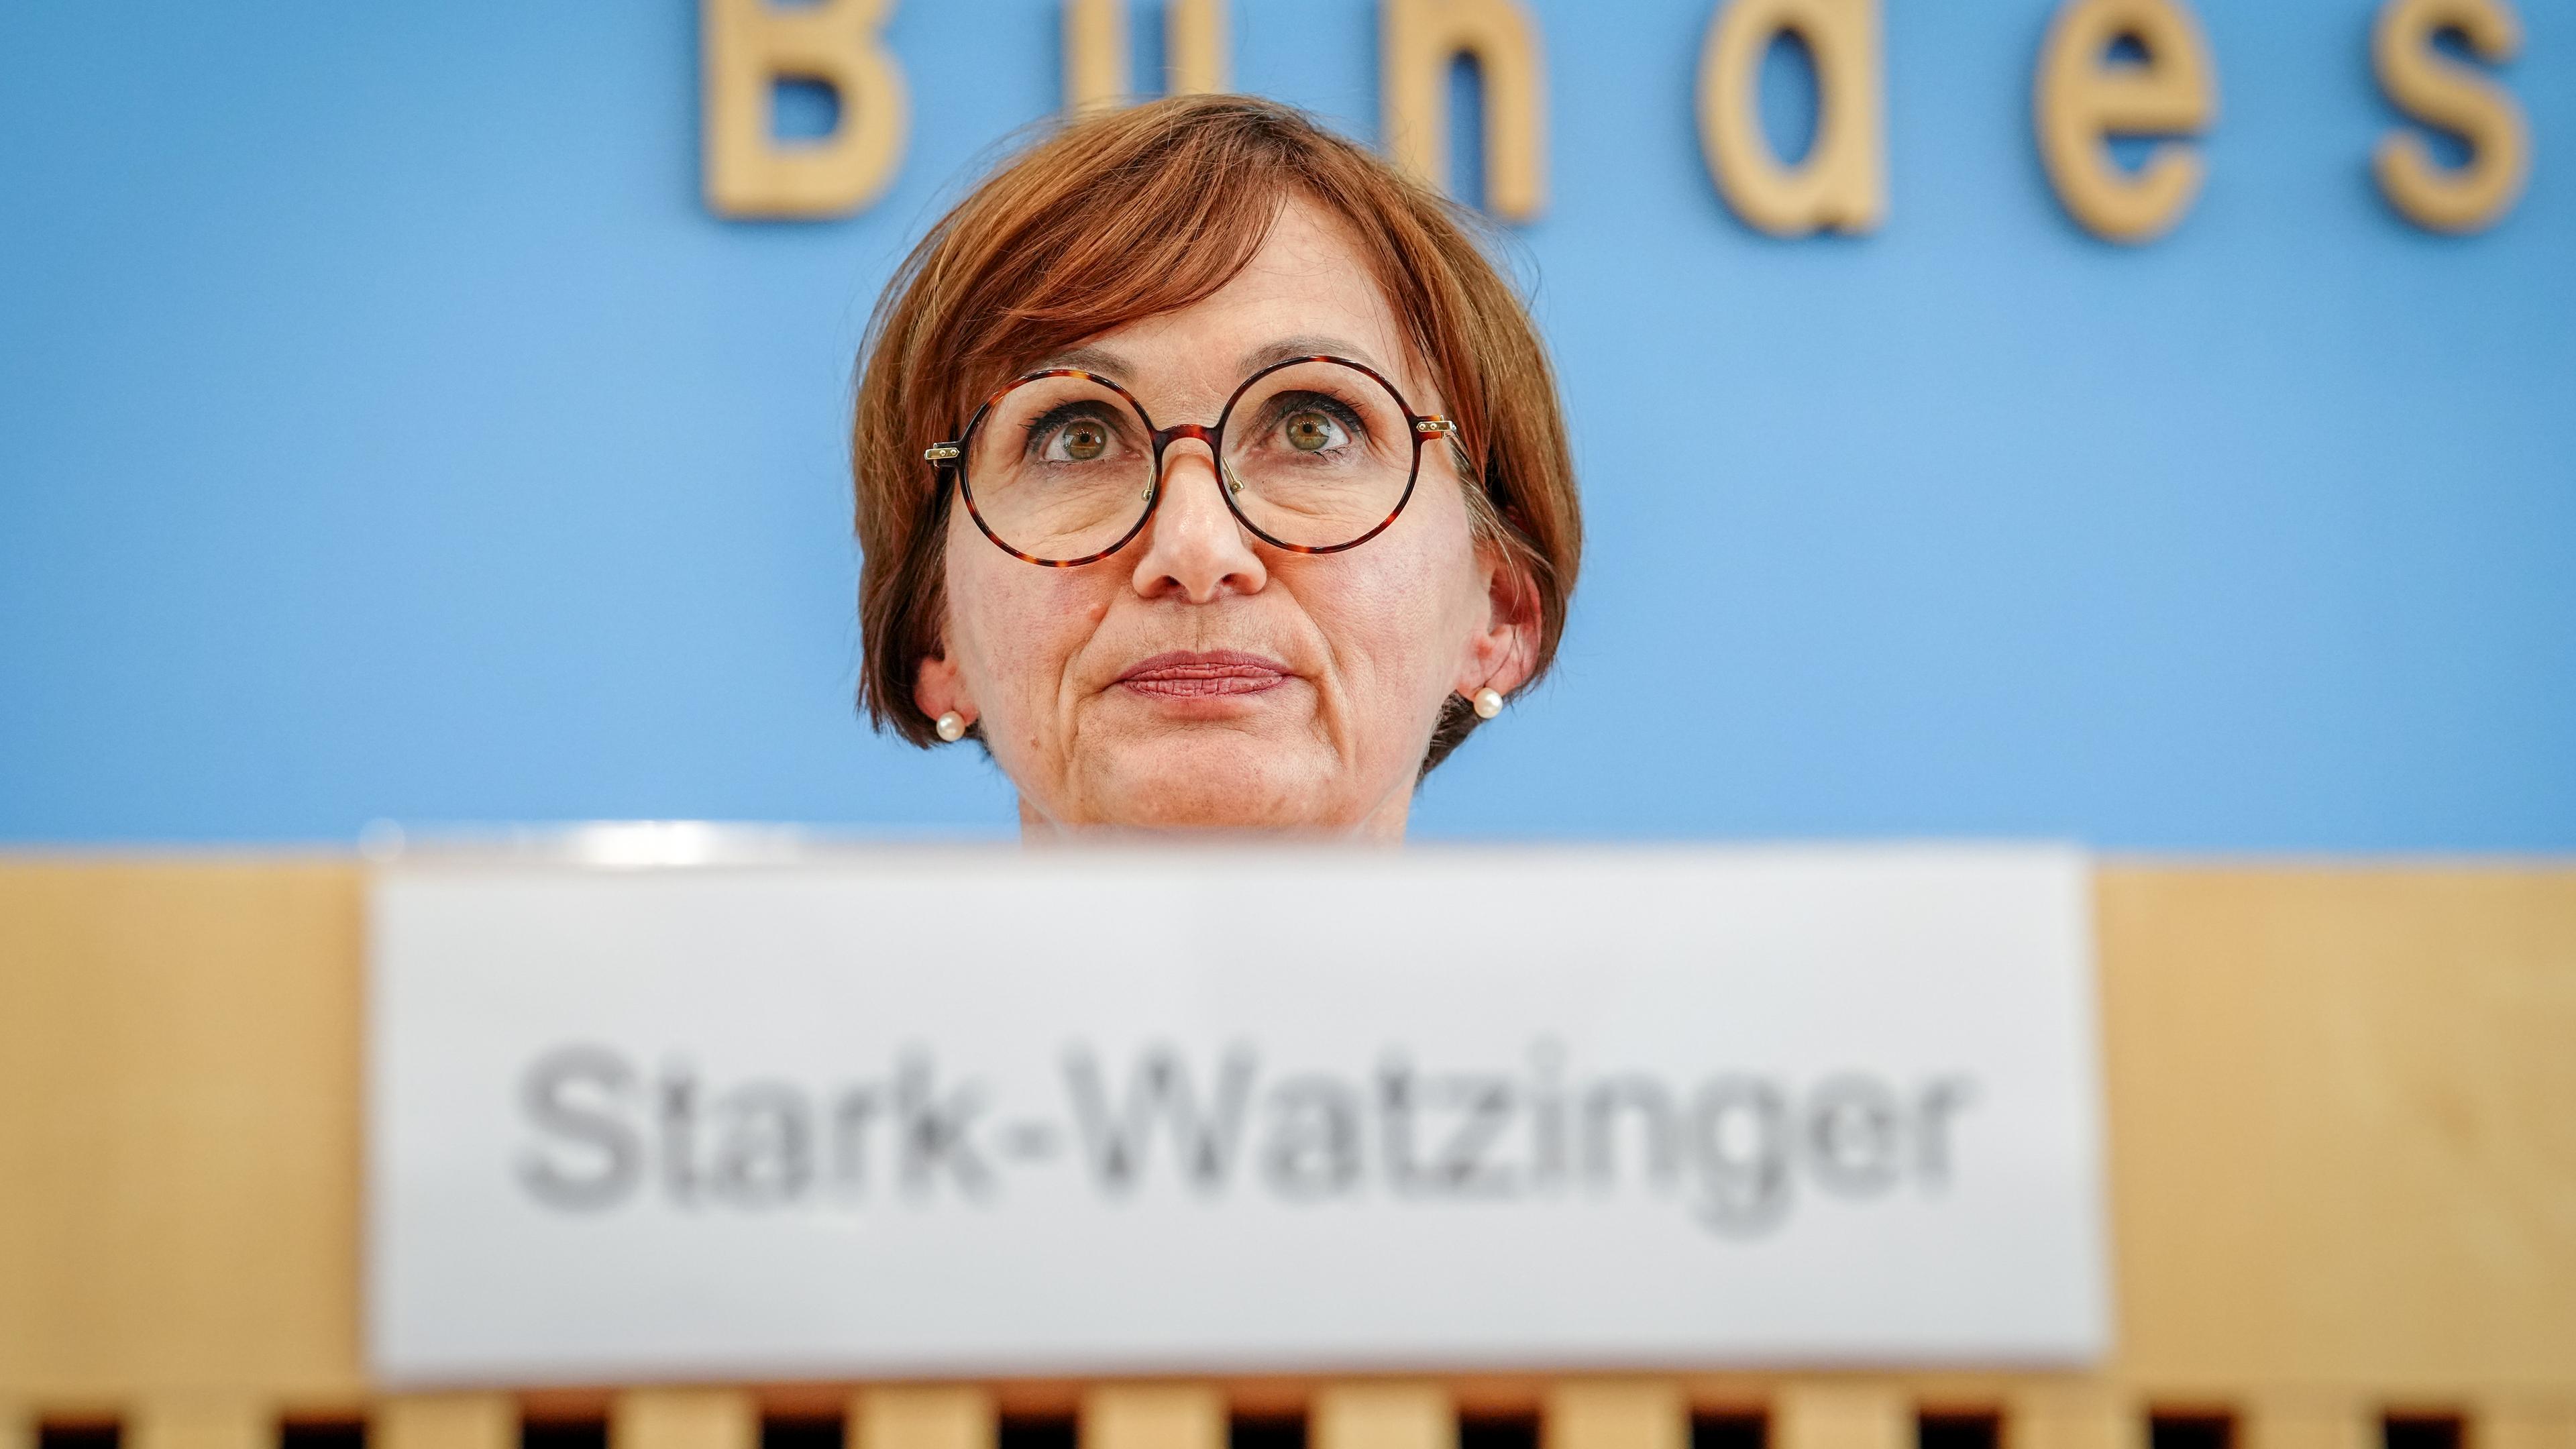  Bundesbildungsministerin Stark-Watzinger